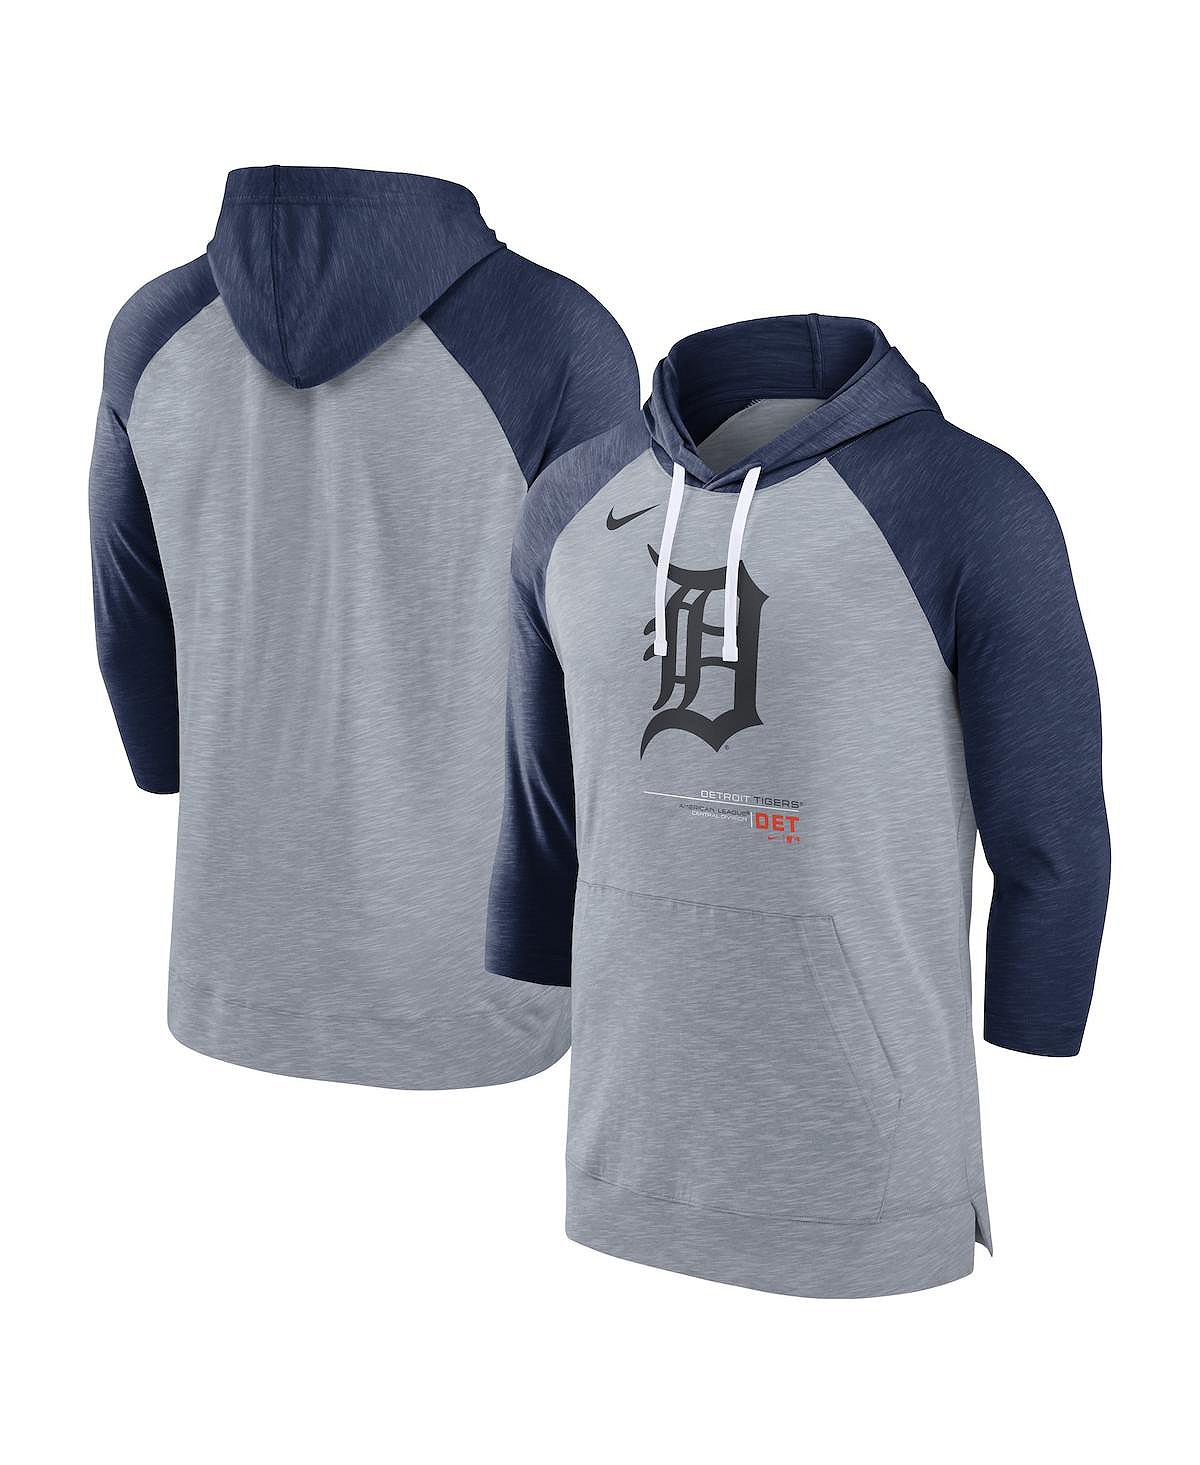 Мужской пуловер с капюшоном с капюшоном цвета реглан, серый Хизер, темно-синий Хизер Detroit Tigers Бейсбол реглан с рукавами 3/4 Nike detroit